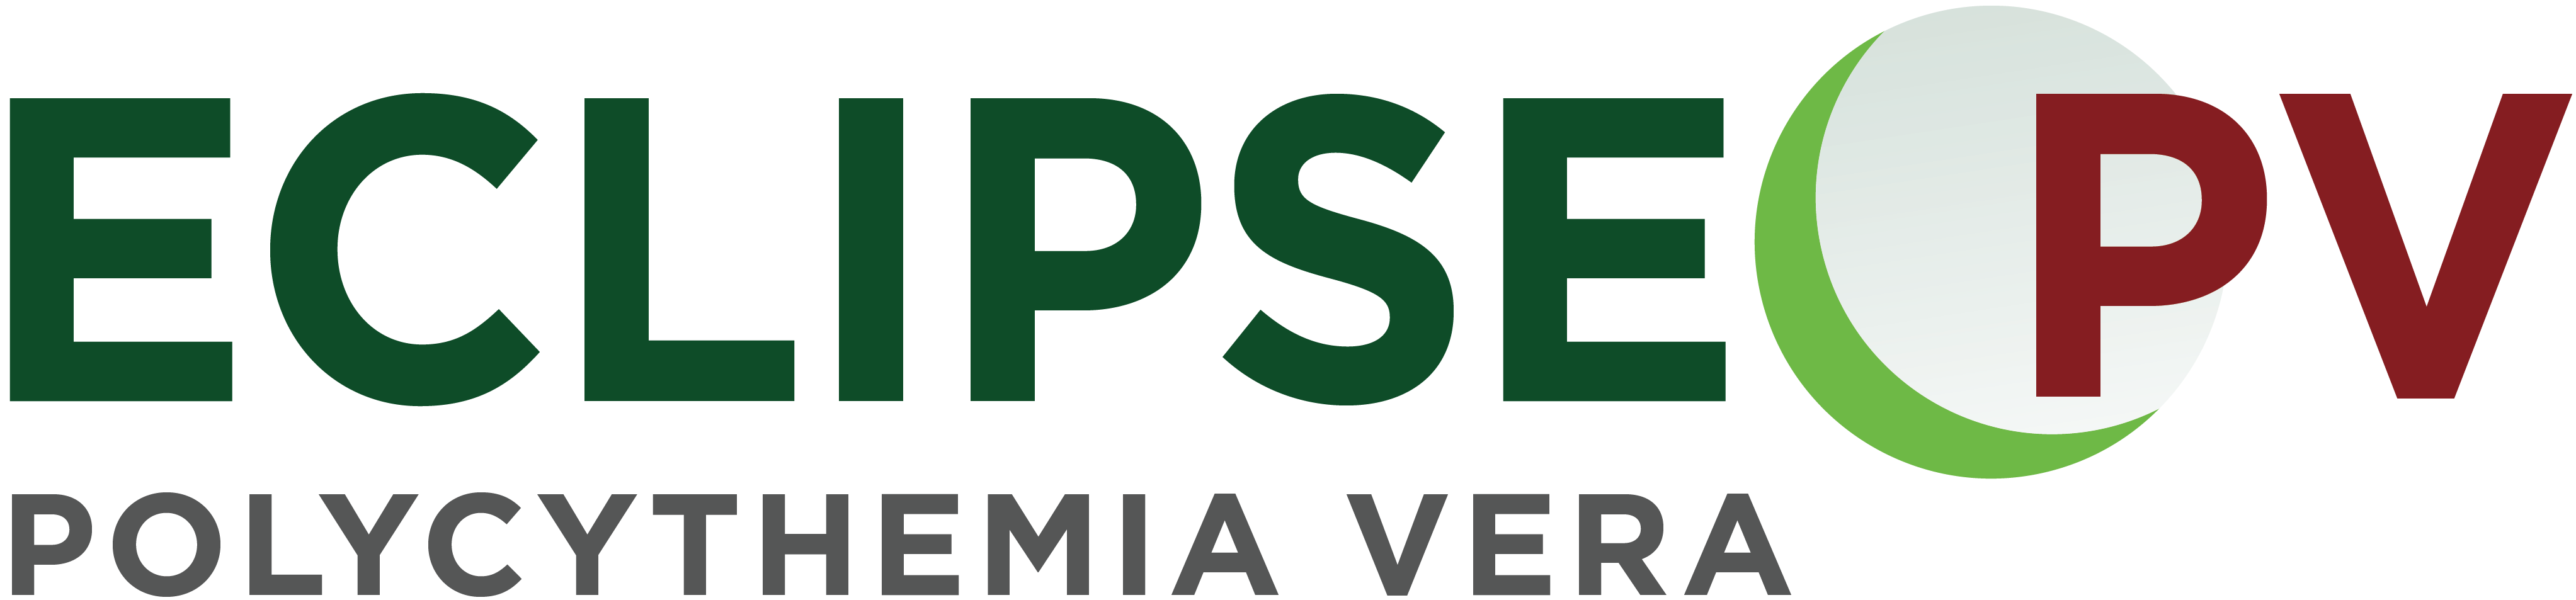 ECLIPSE PV Logo cropped